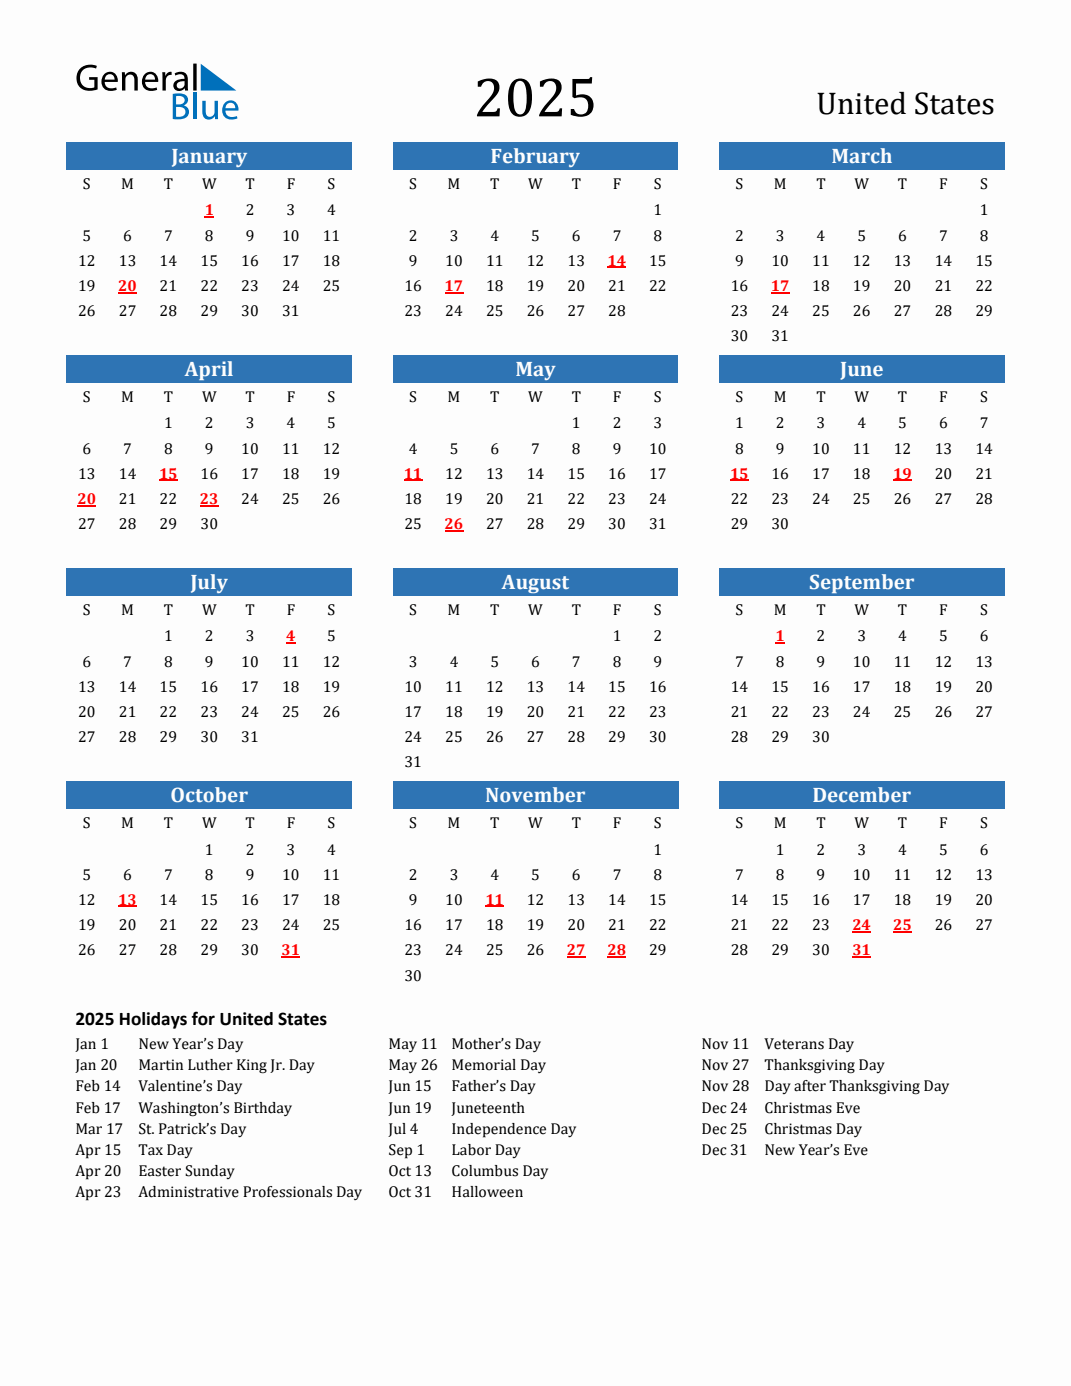 sdusd-san-diego-unified-school-district-calendar-for-2022-2023